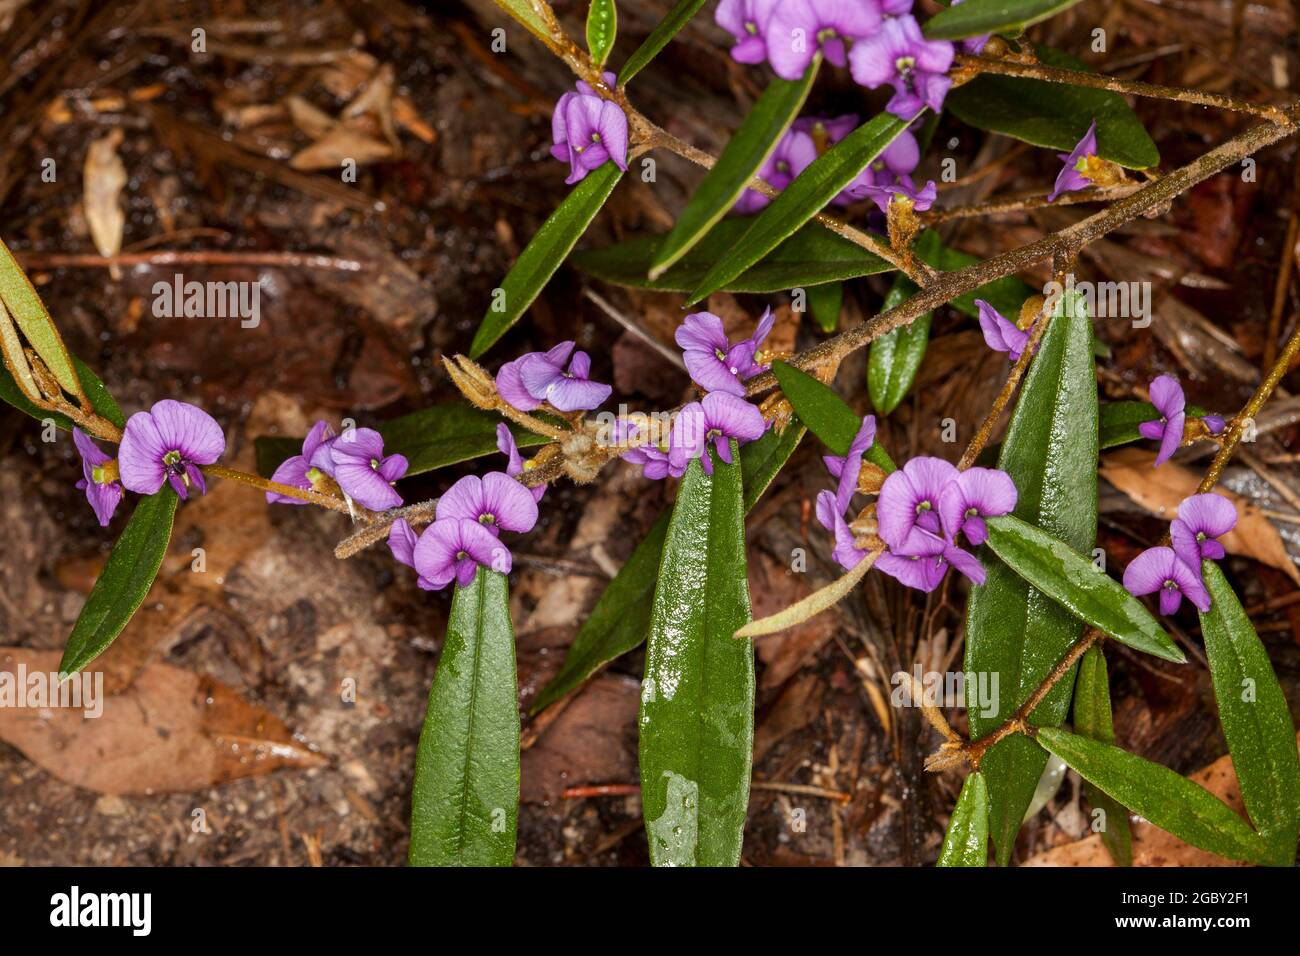 Colourful wildflowers, vivid purple flowers and dark green leaves of Hovea acutifolia, Purple Pea Bush, an Australian native shrub Stock Photo